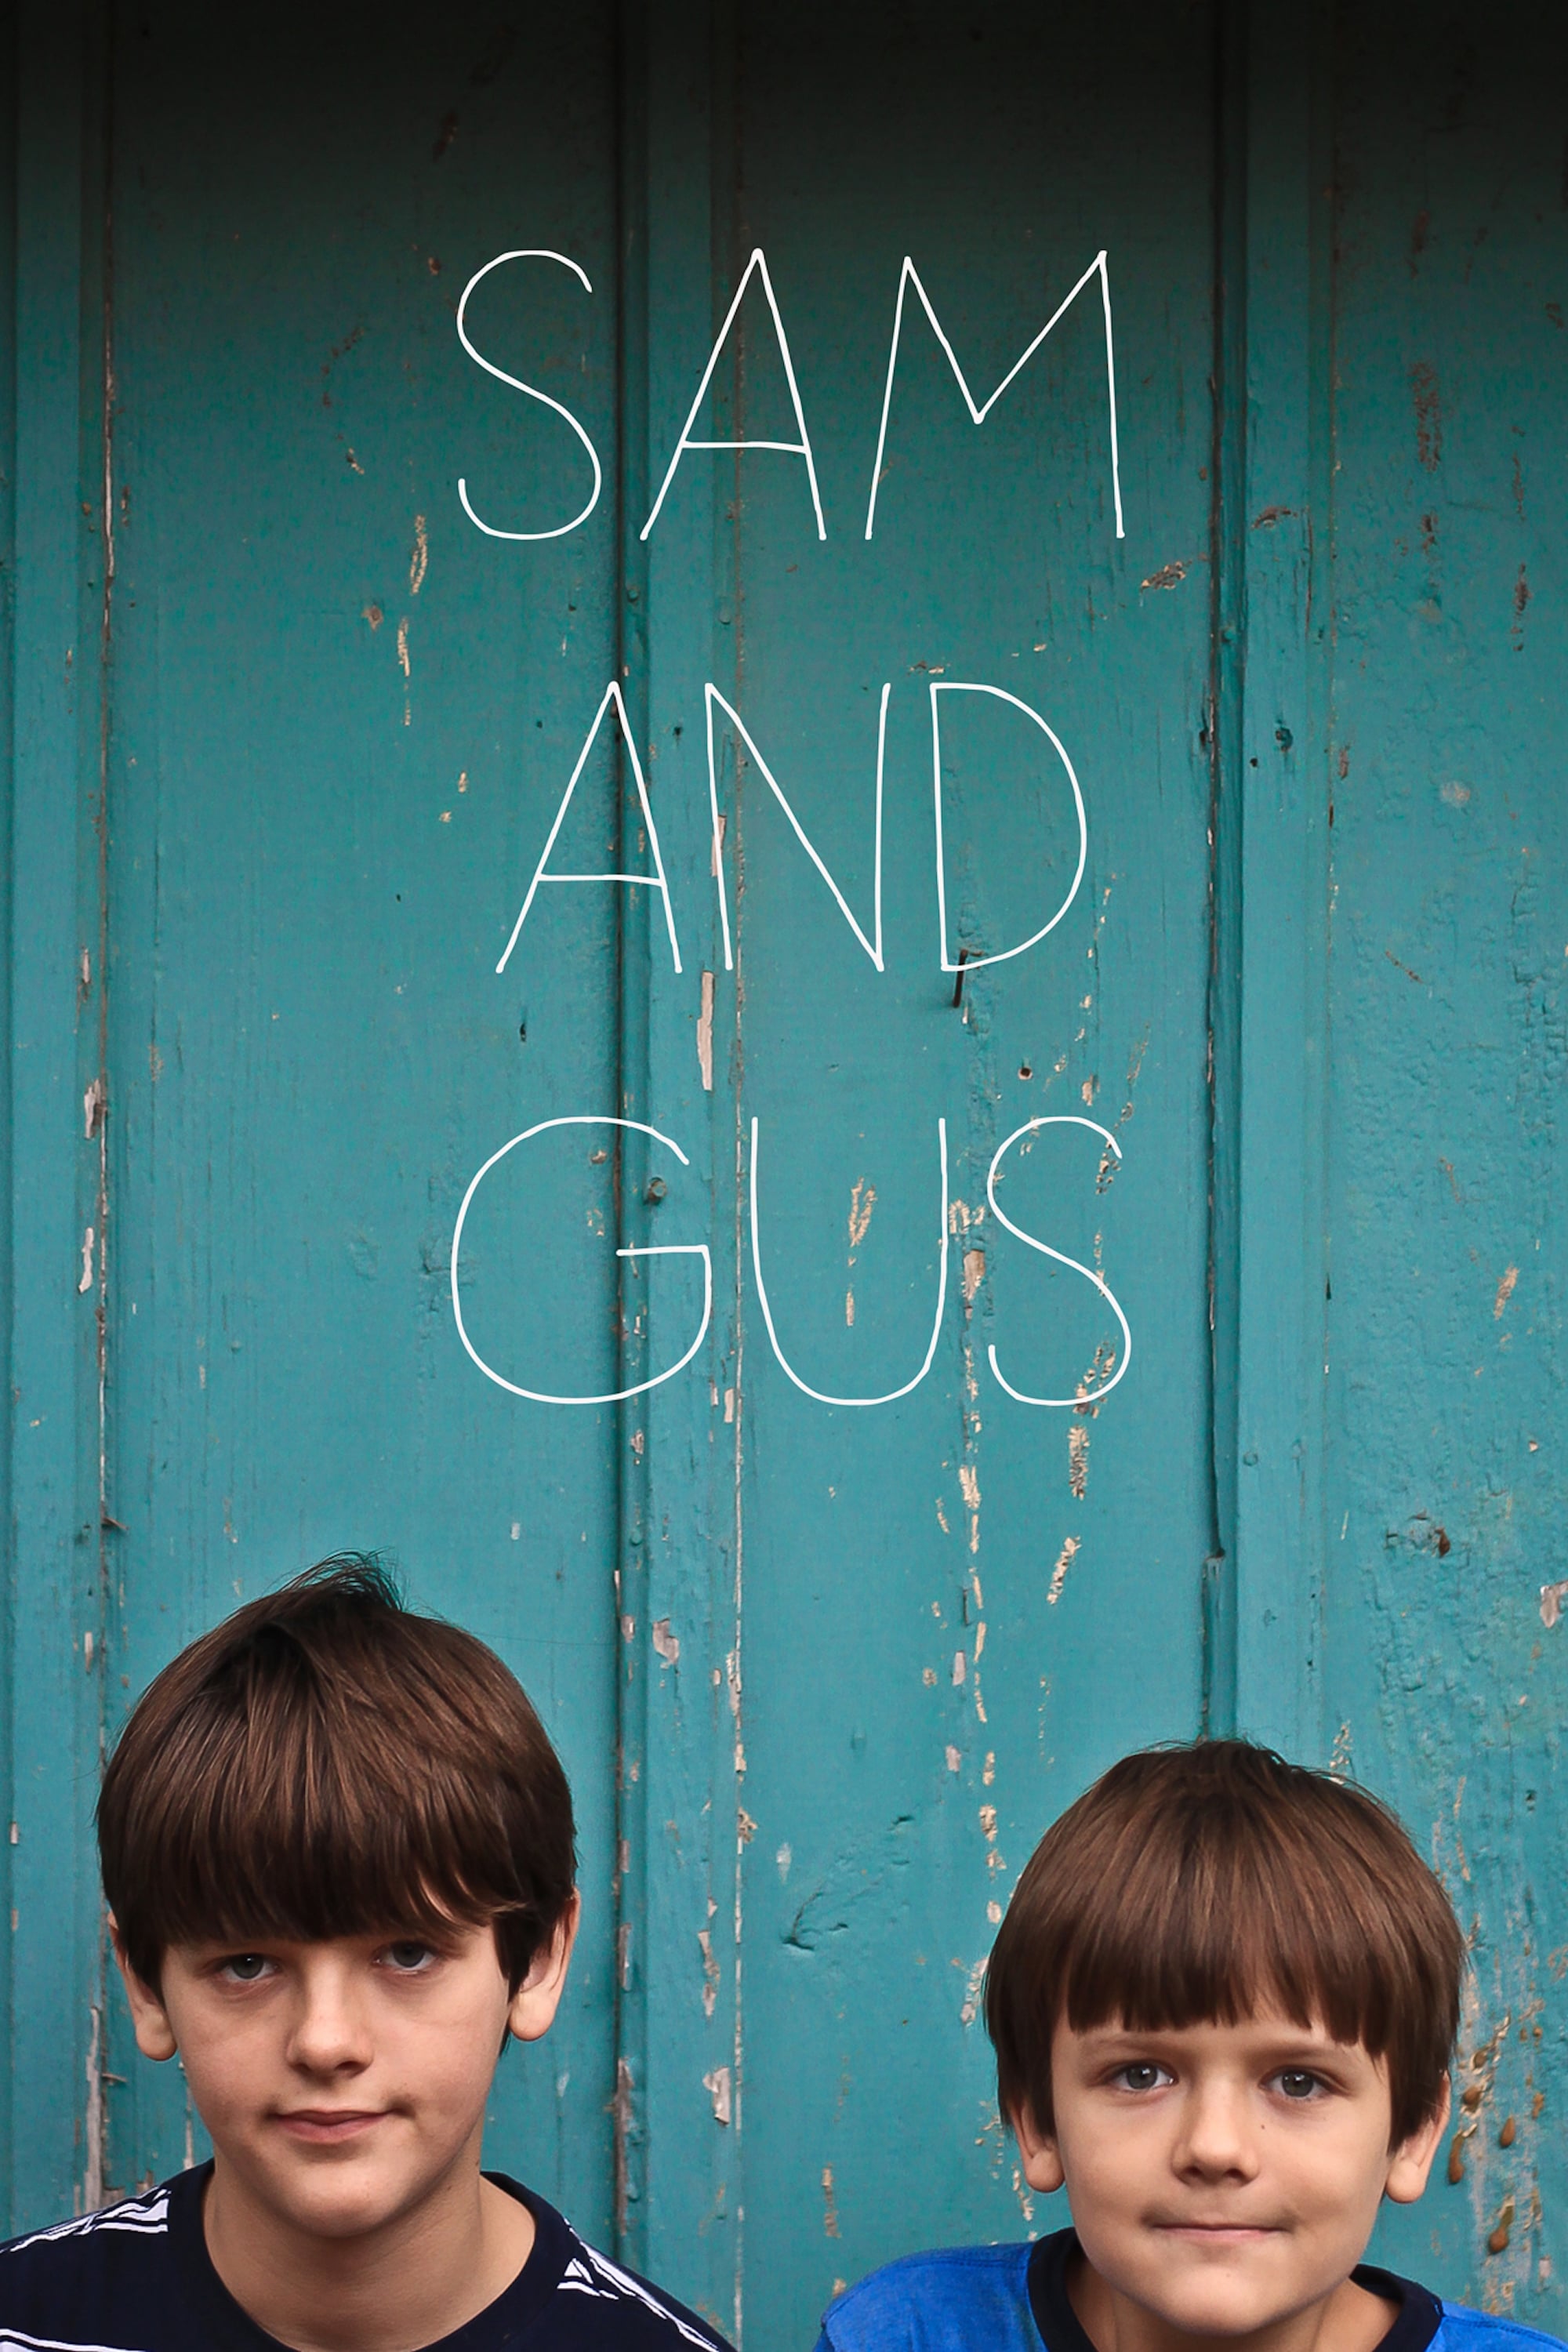 Sam and Gus